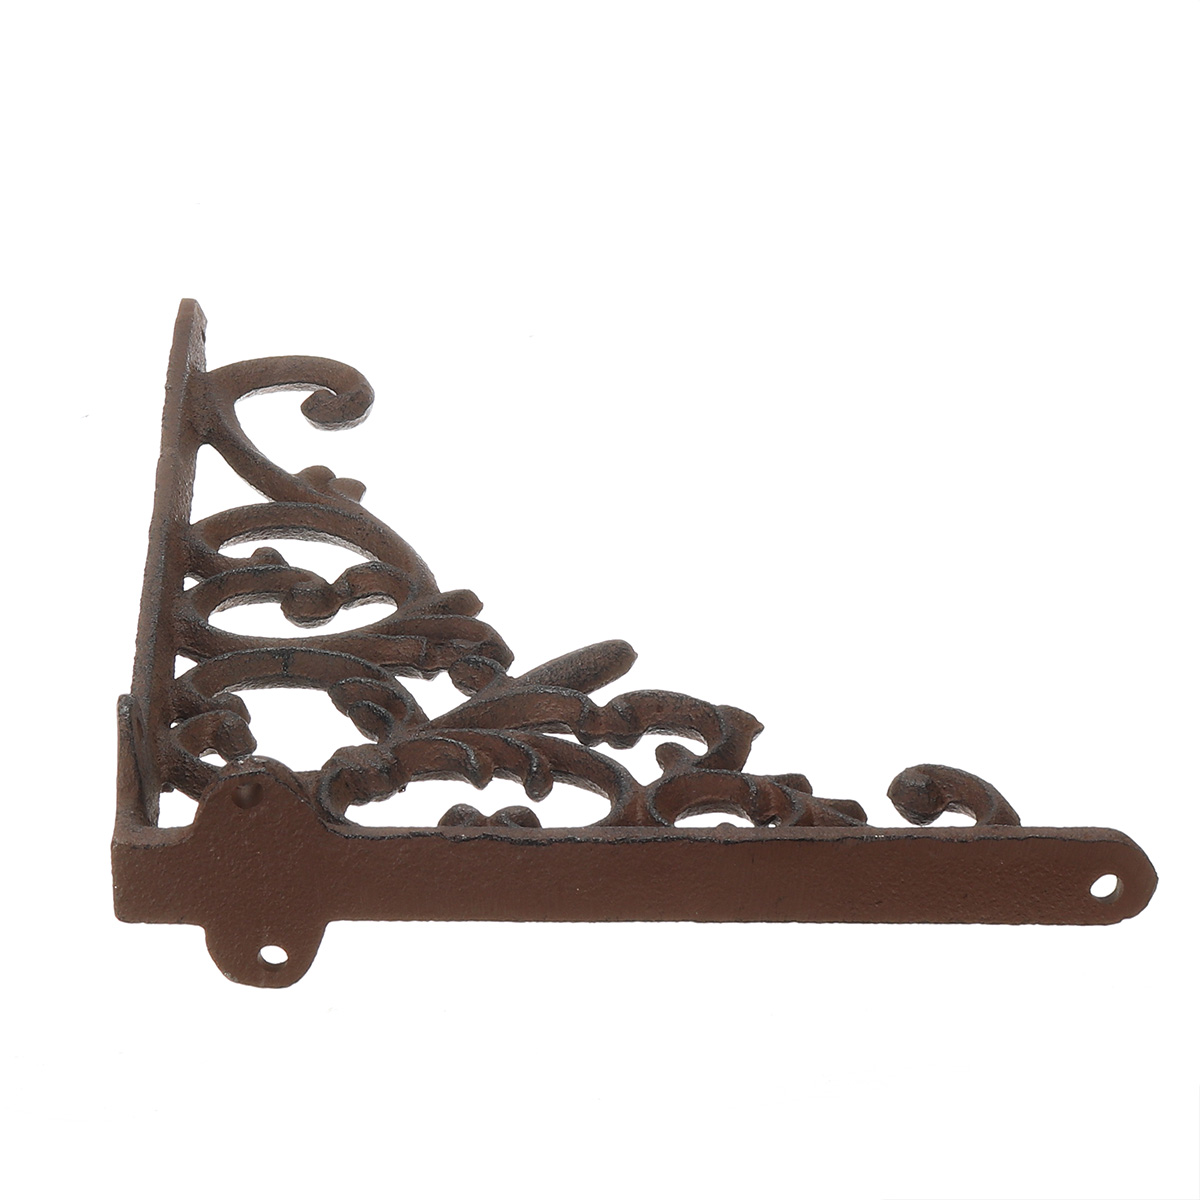 Retro-Industrial-Cast-Iron-Shelf-Bracket-Wall-Mounted-Shelf-Supporter-Garden-1571314-6